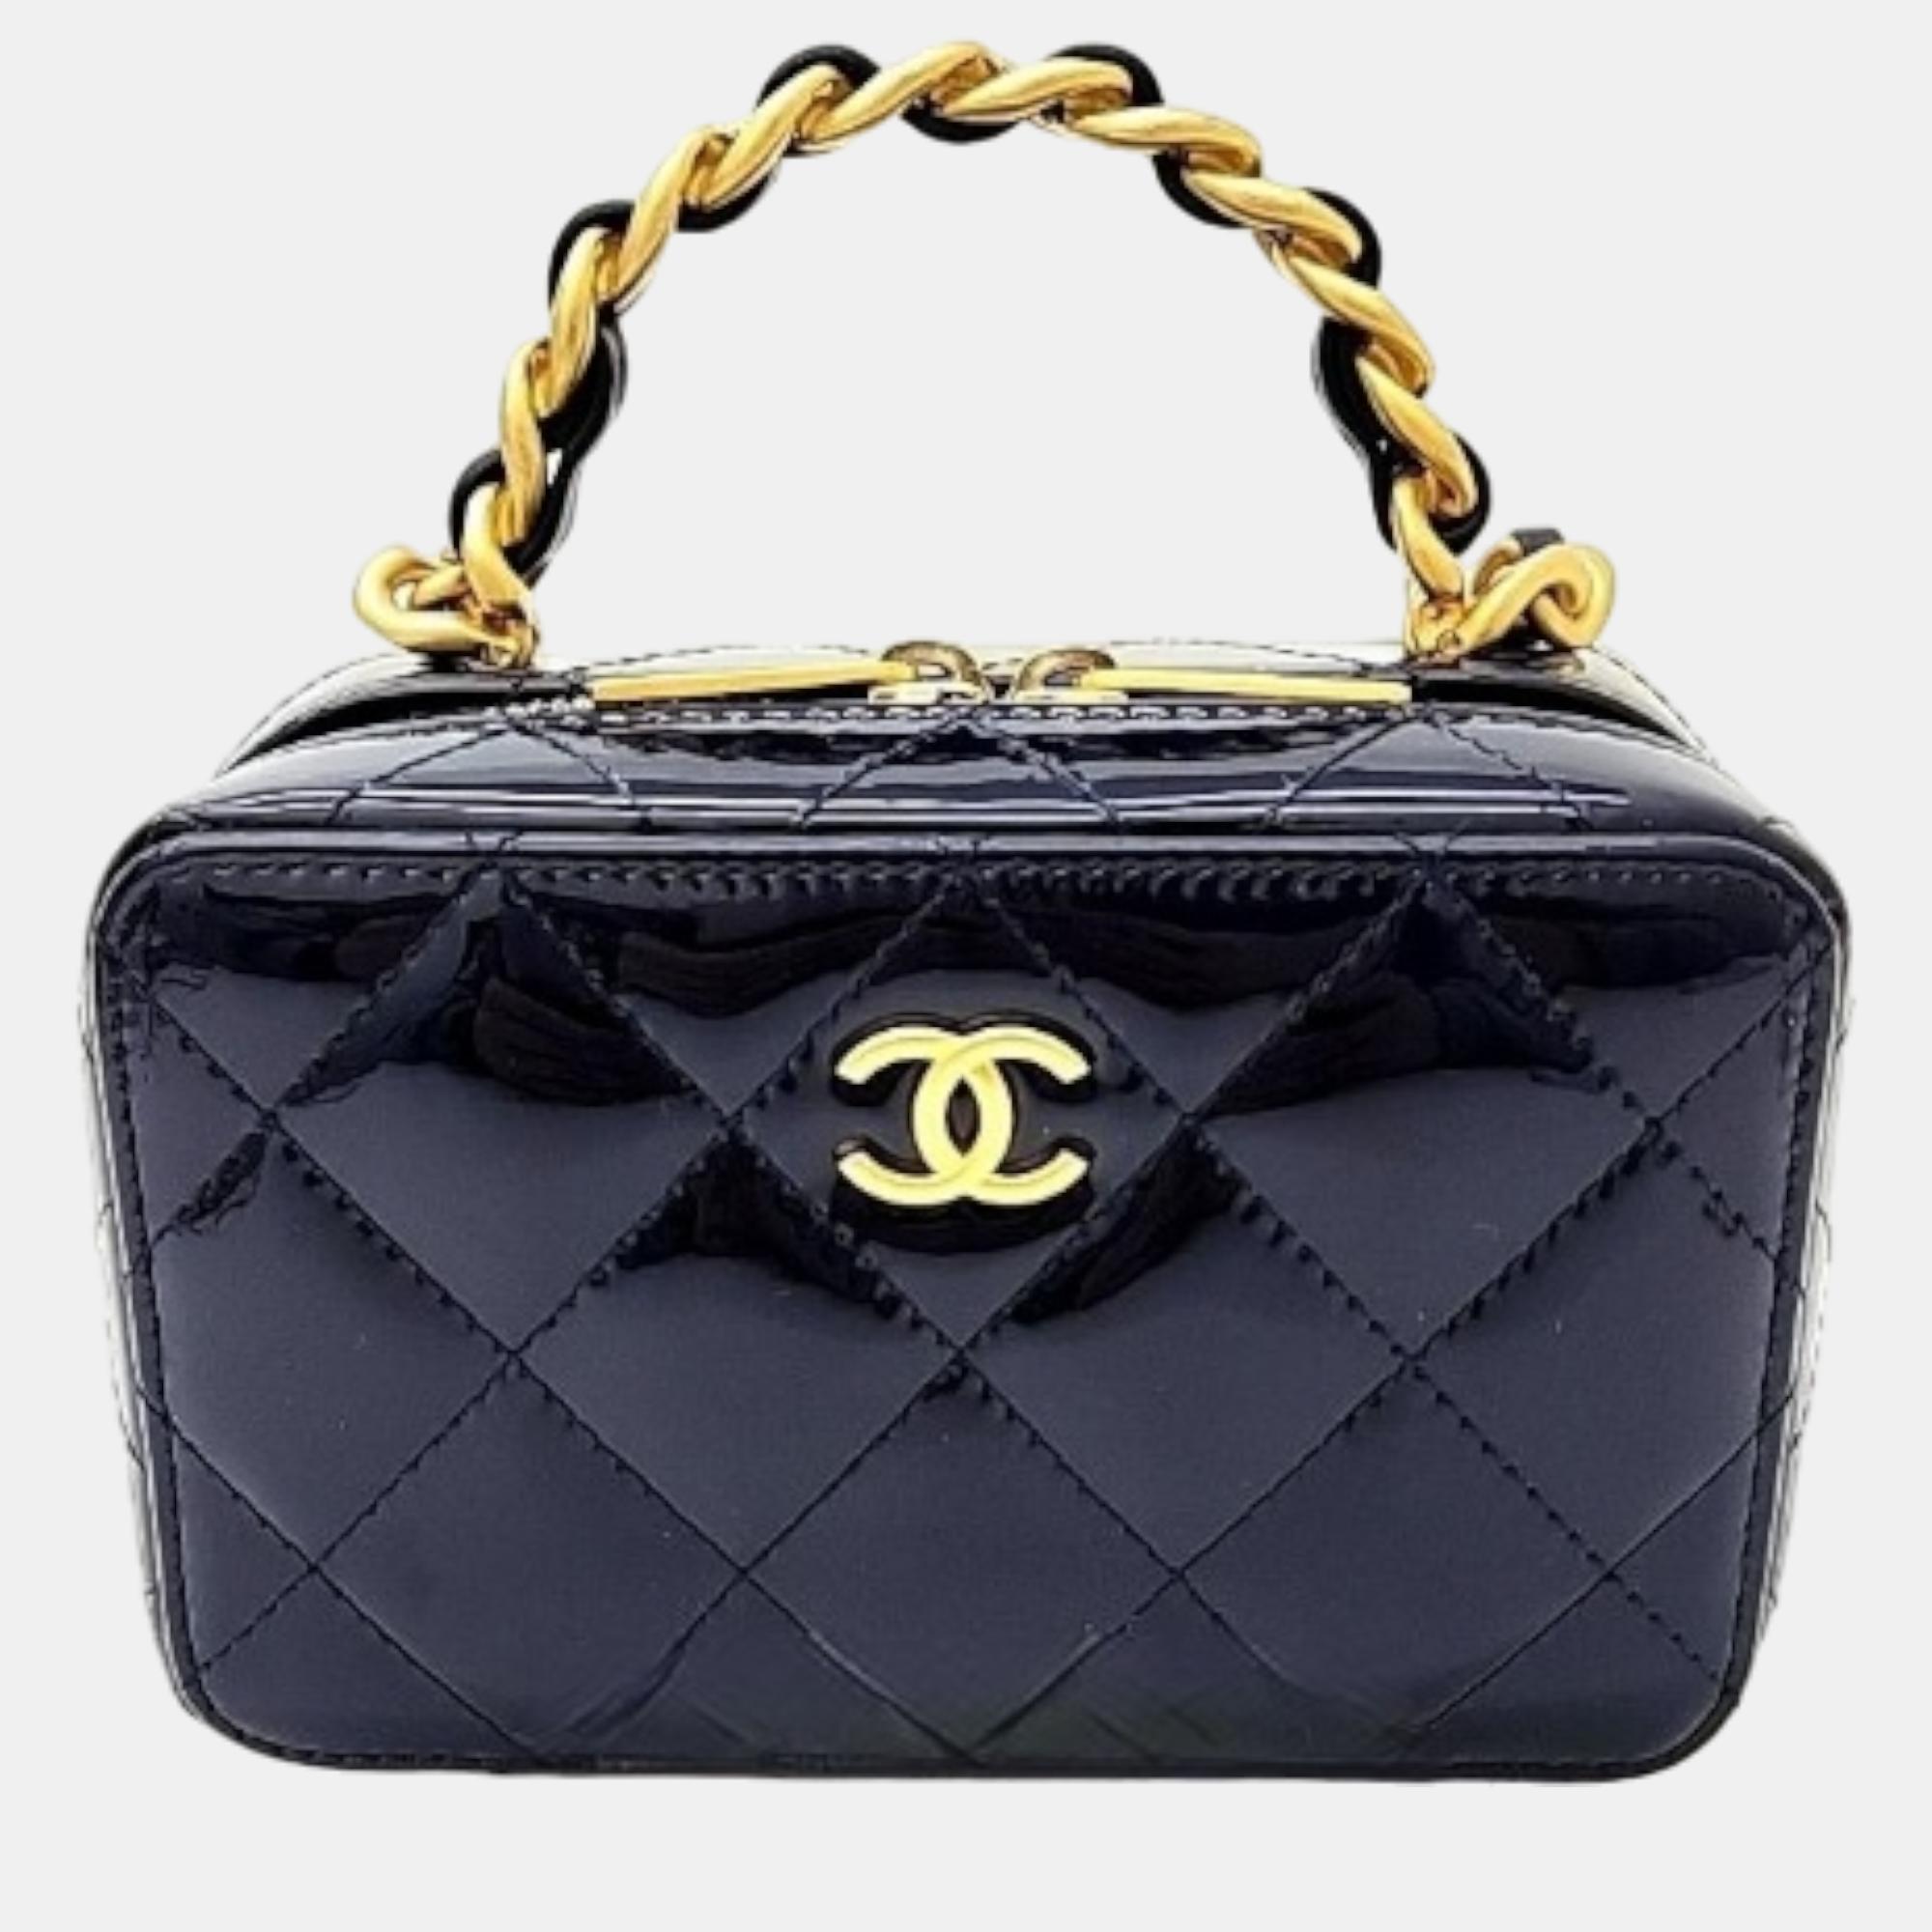 Chanel patent cosmetic top handle crossbody bag